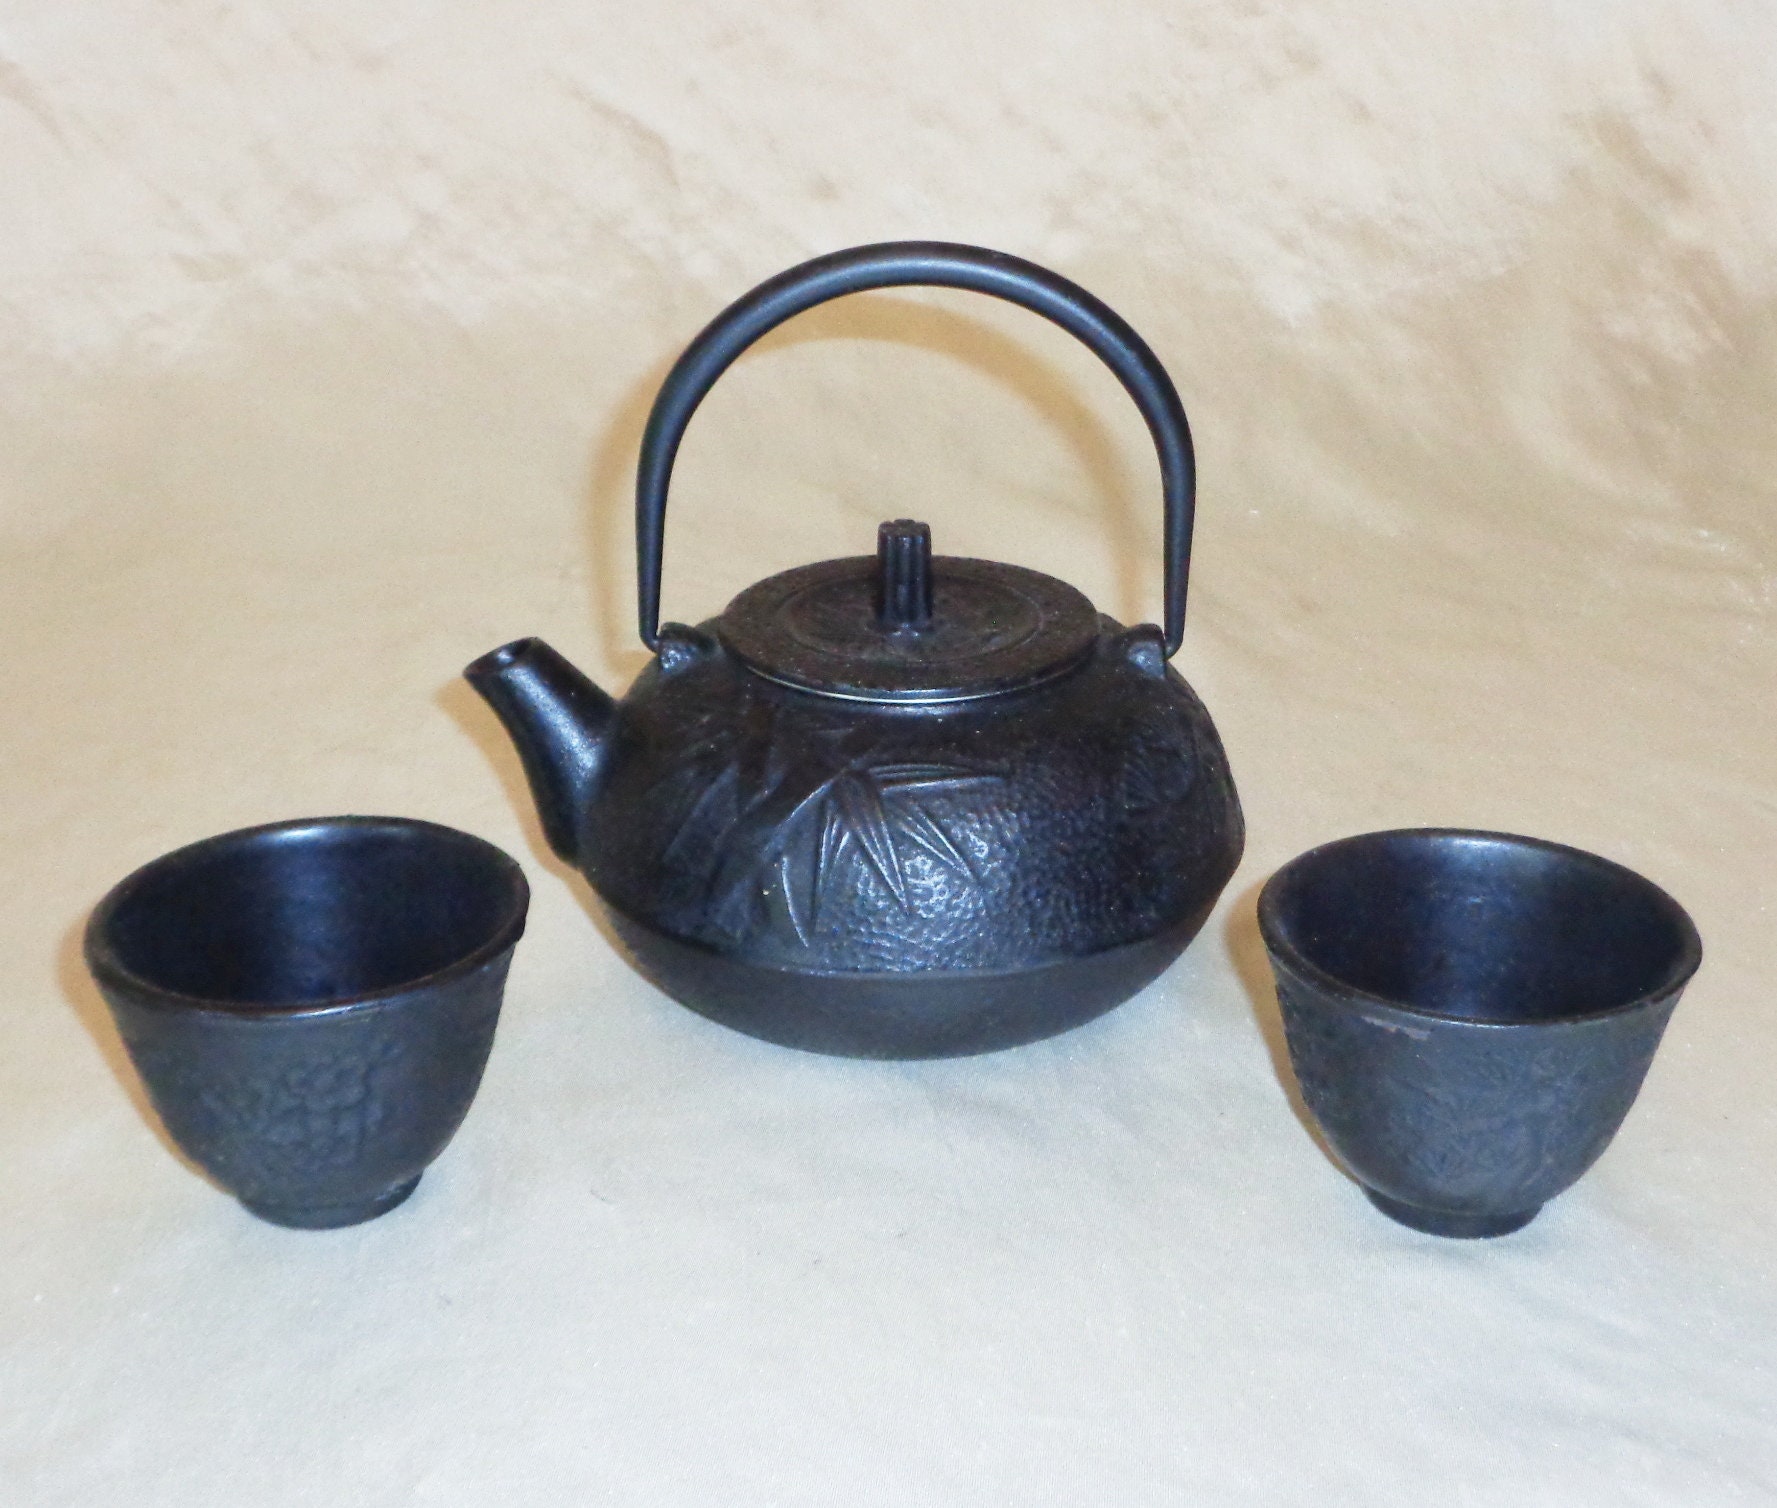 Antique Meiji Era Japanese Cast Iron Hanging Cook Pot Black Irori Hear, Online Shop